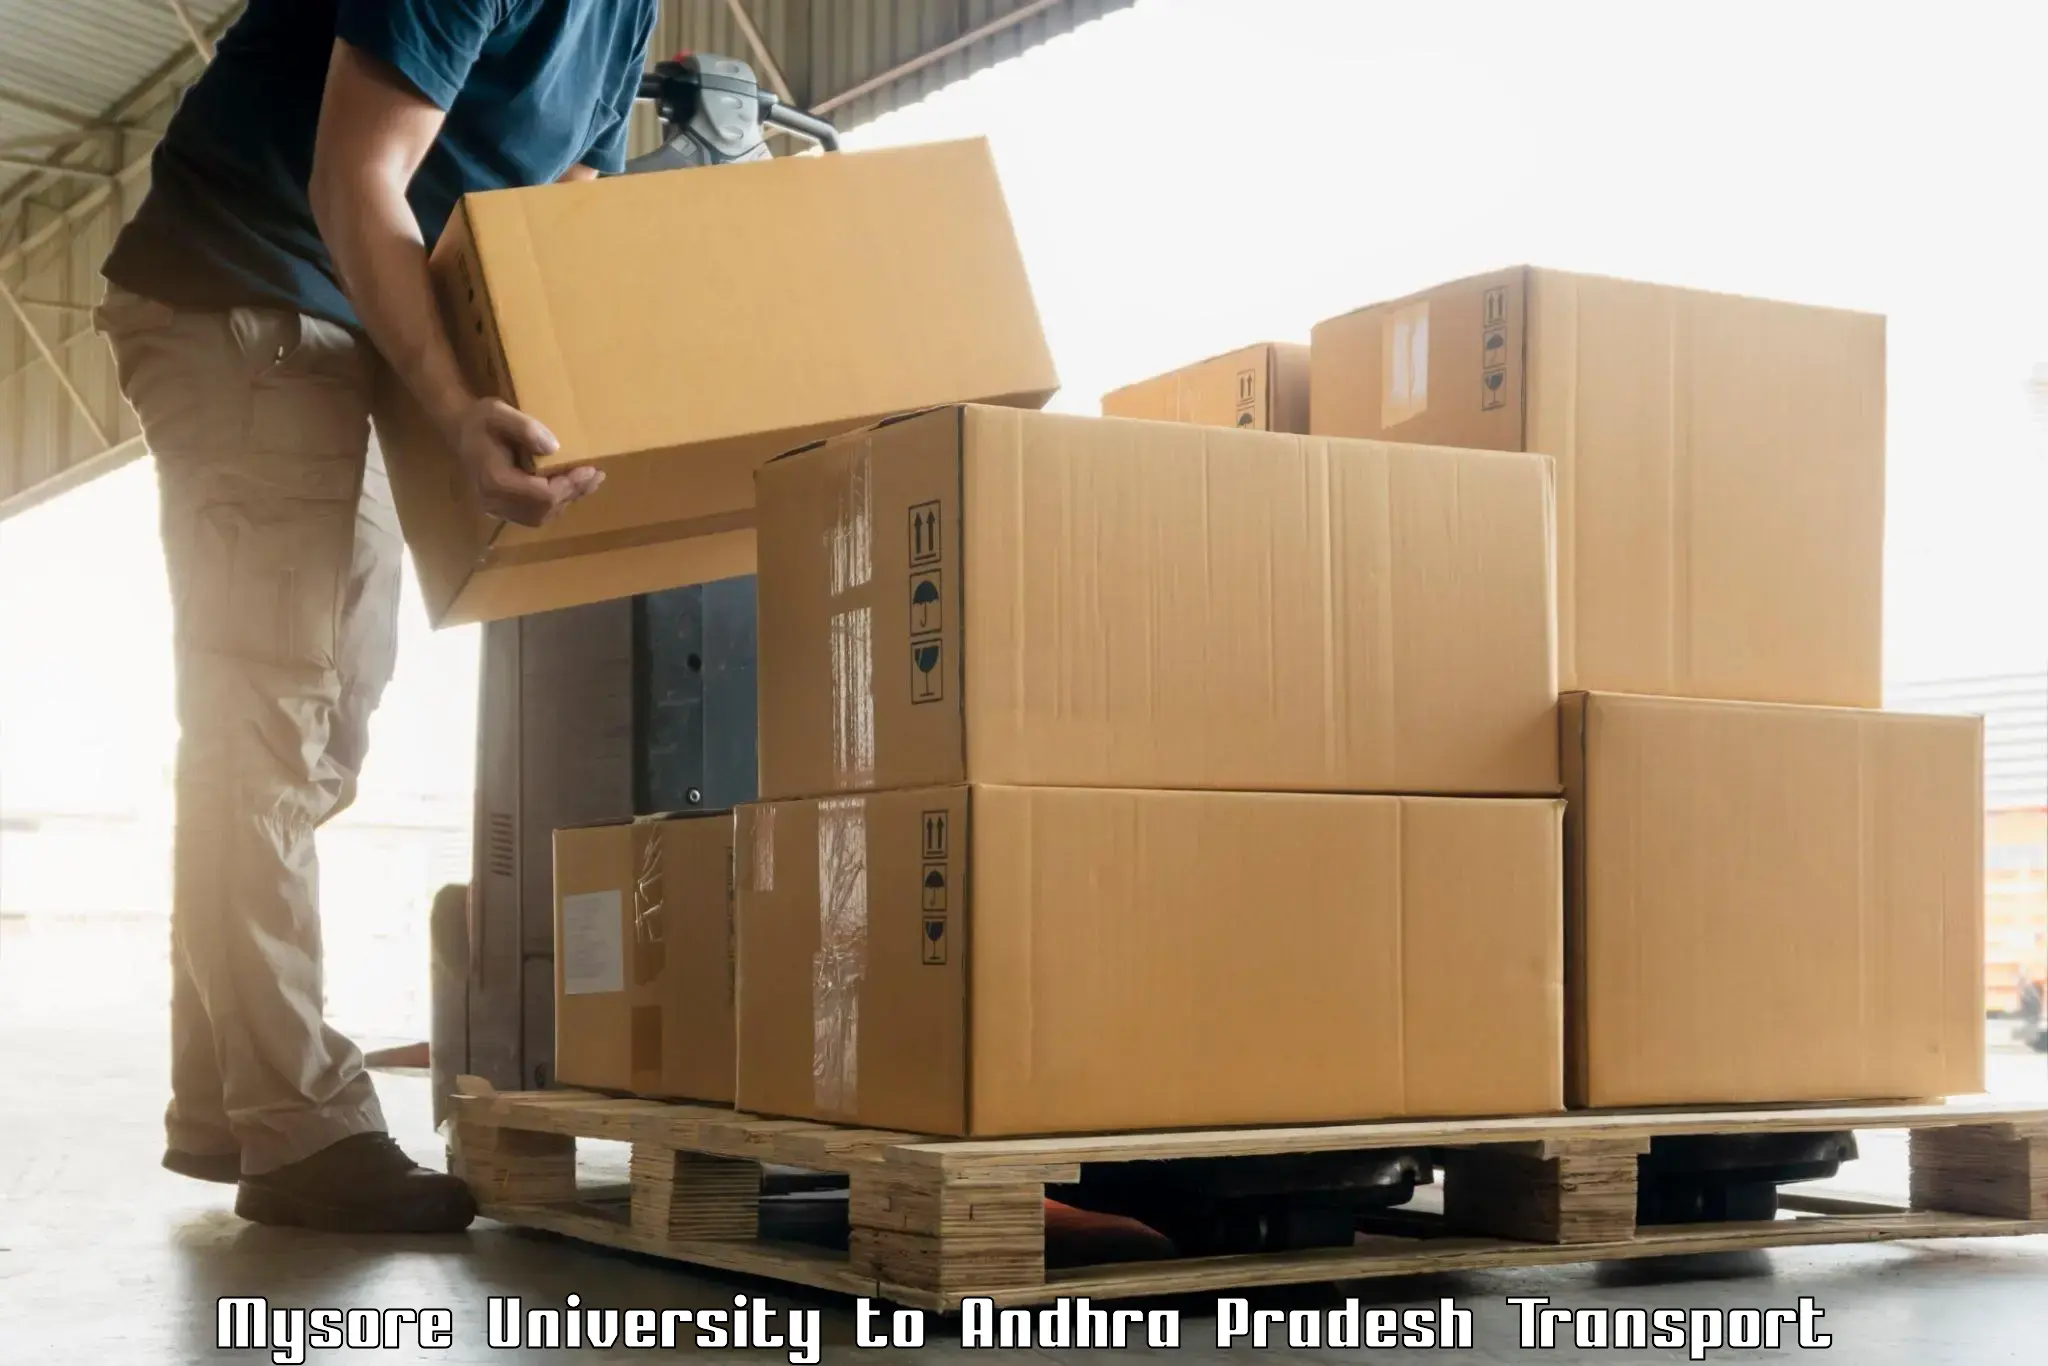 India truck logistics services in Mysore University to Samarlakota